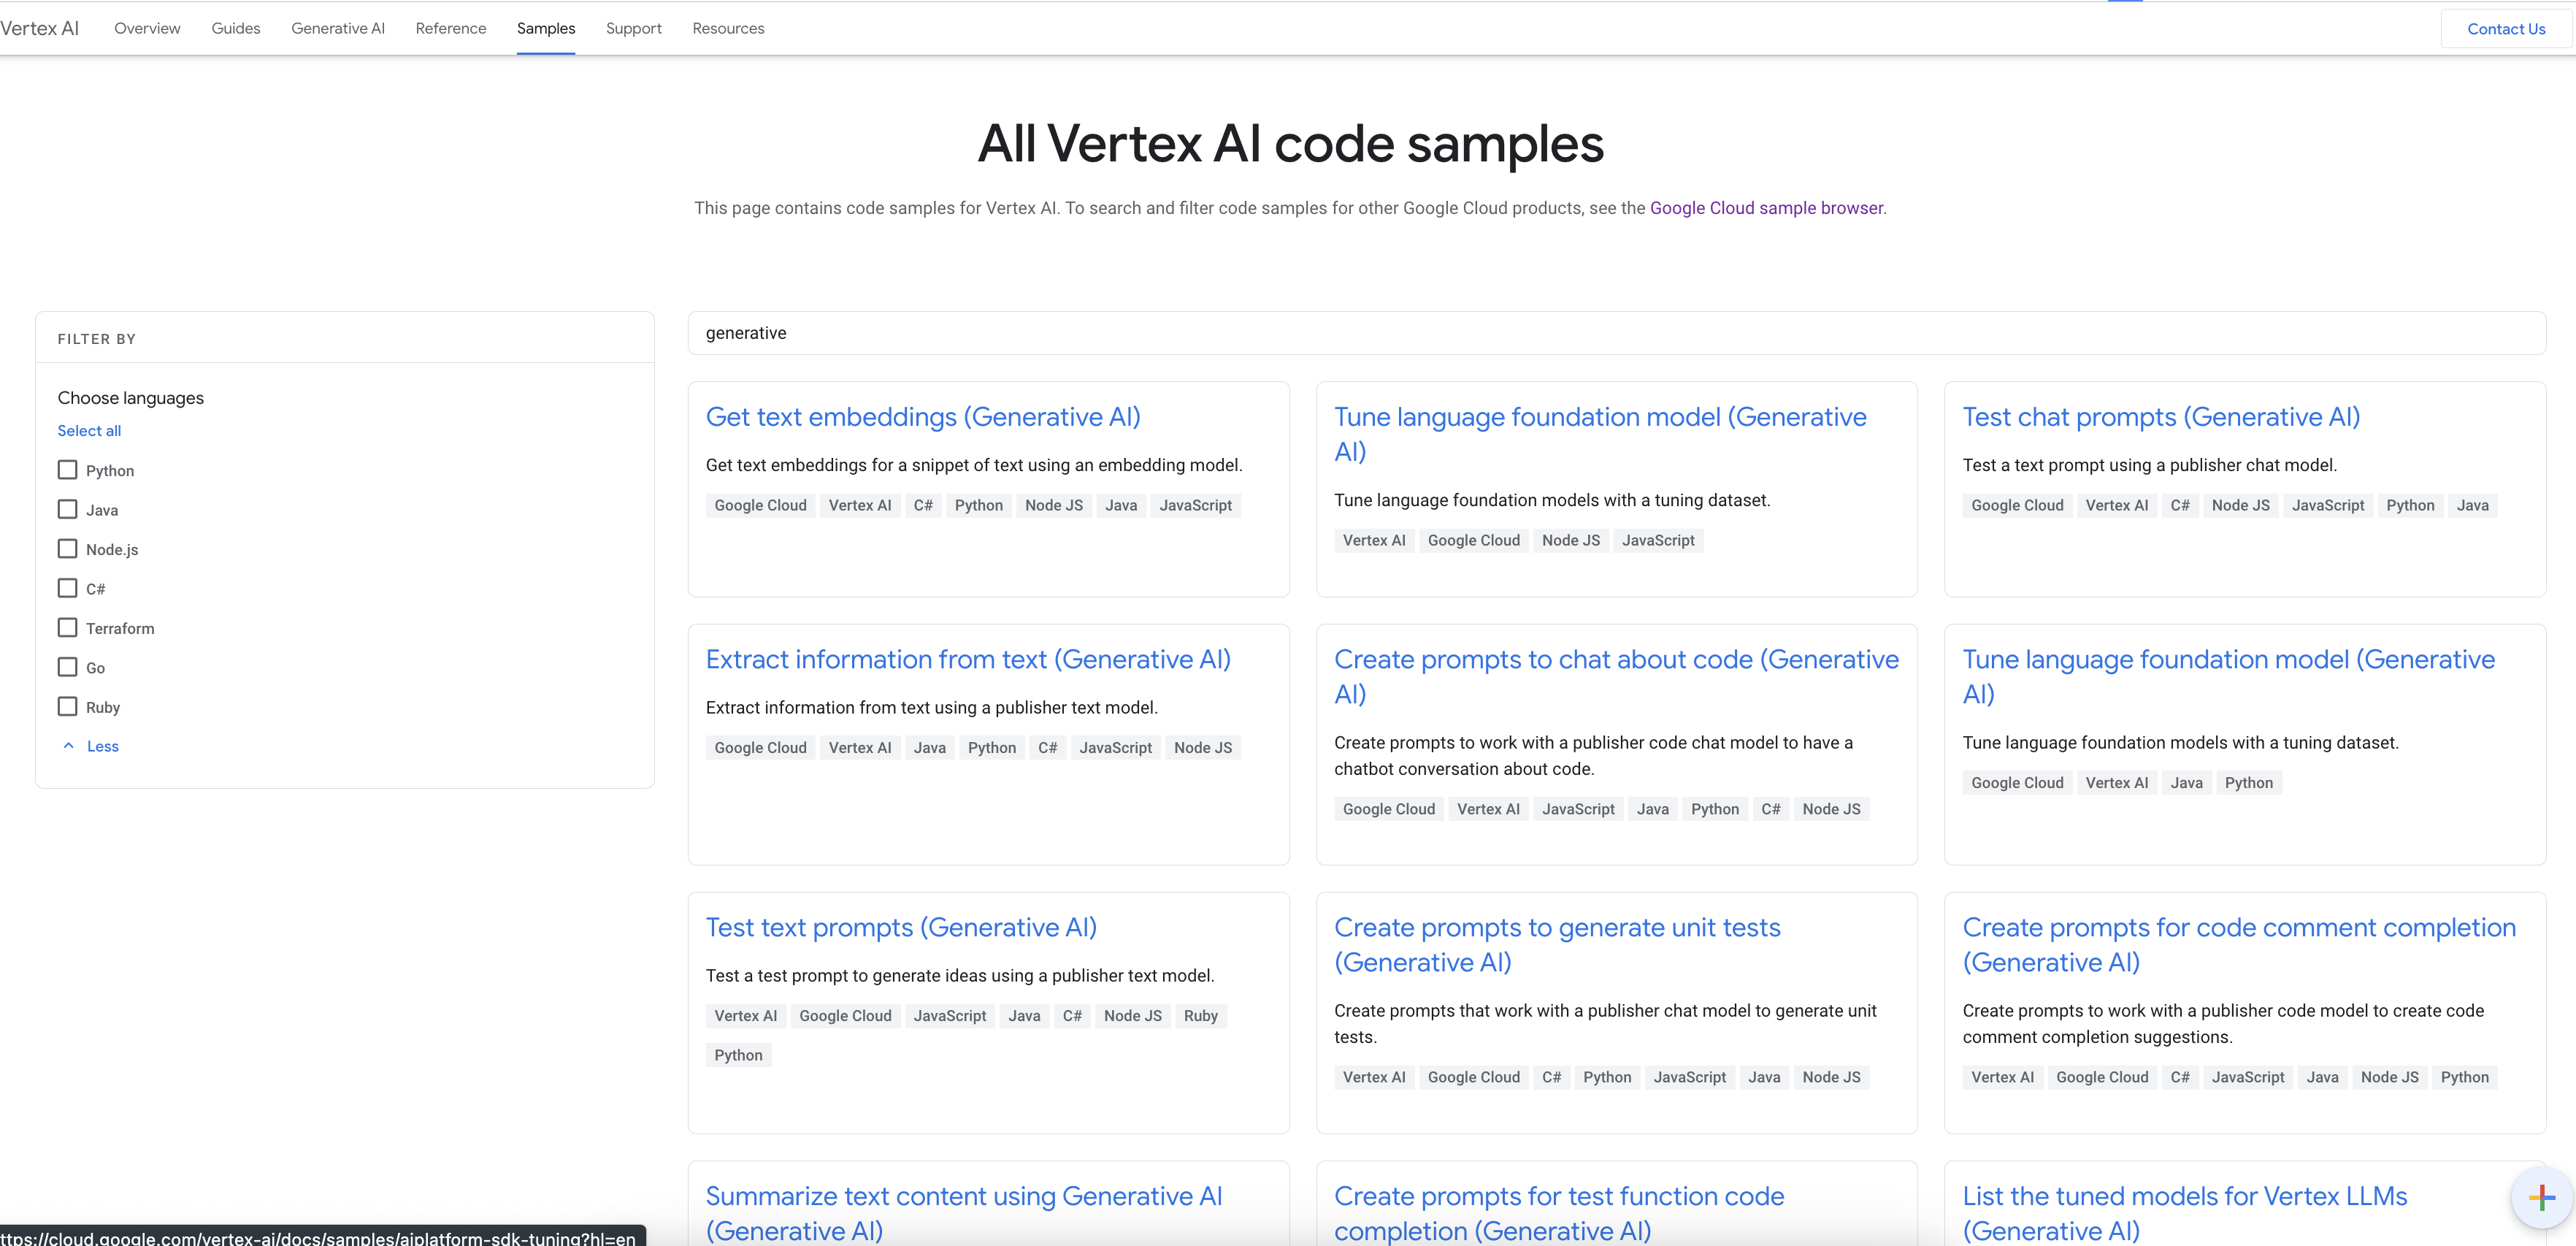 GenAI samples for Vertex AI